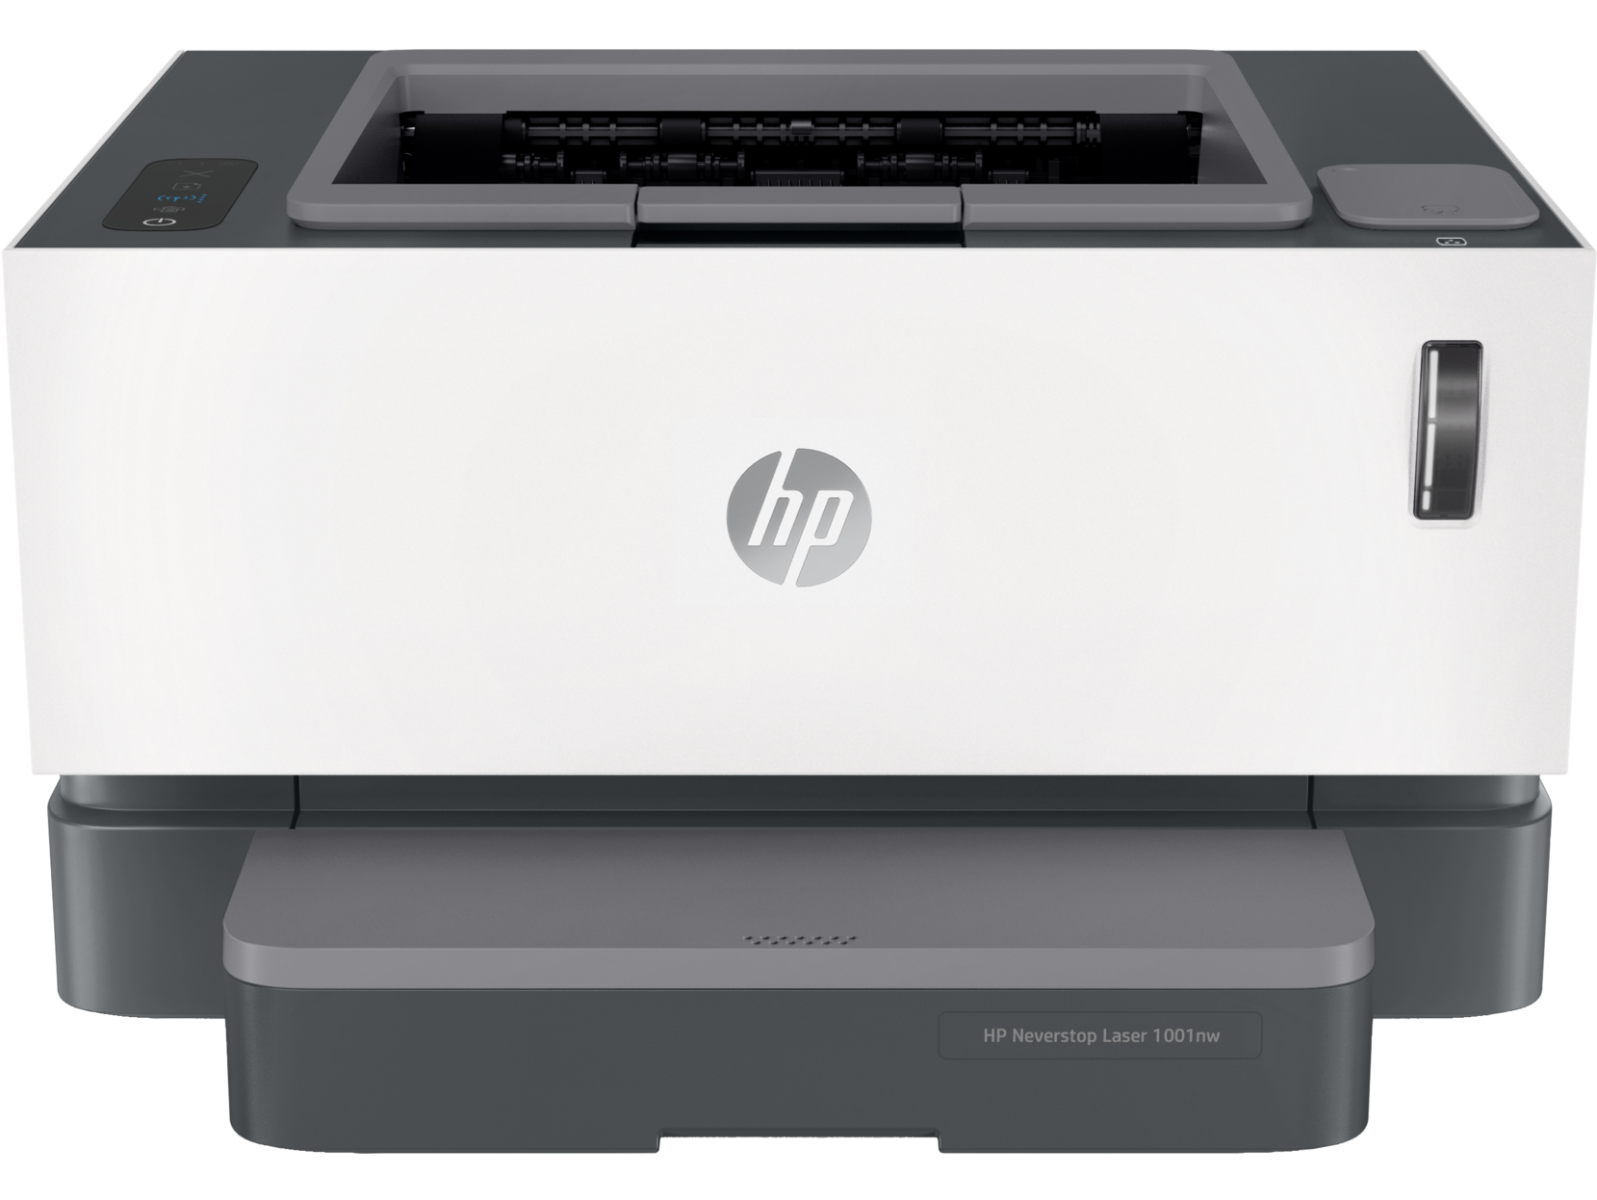 HP - Impressora Laser HP Neverstop 1001nw WiFi